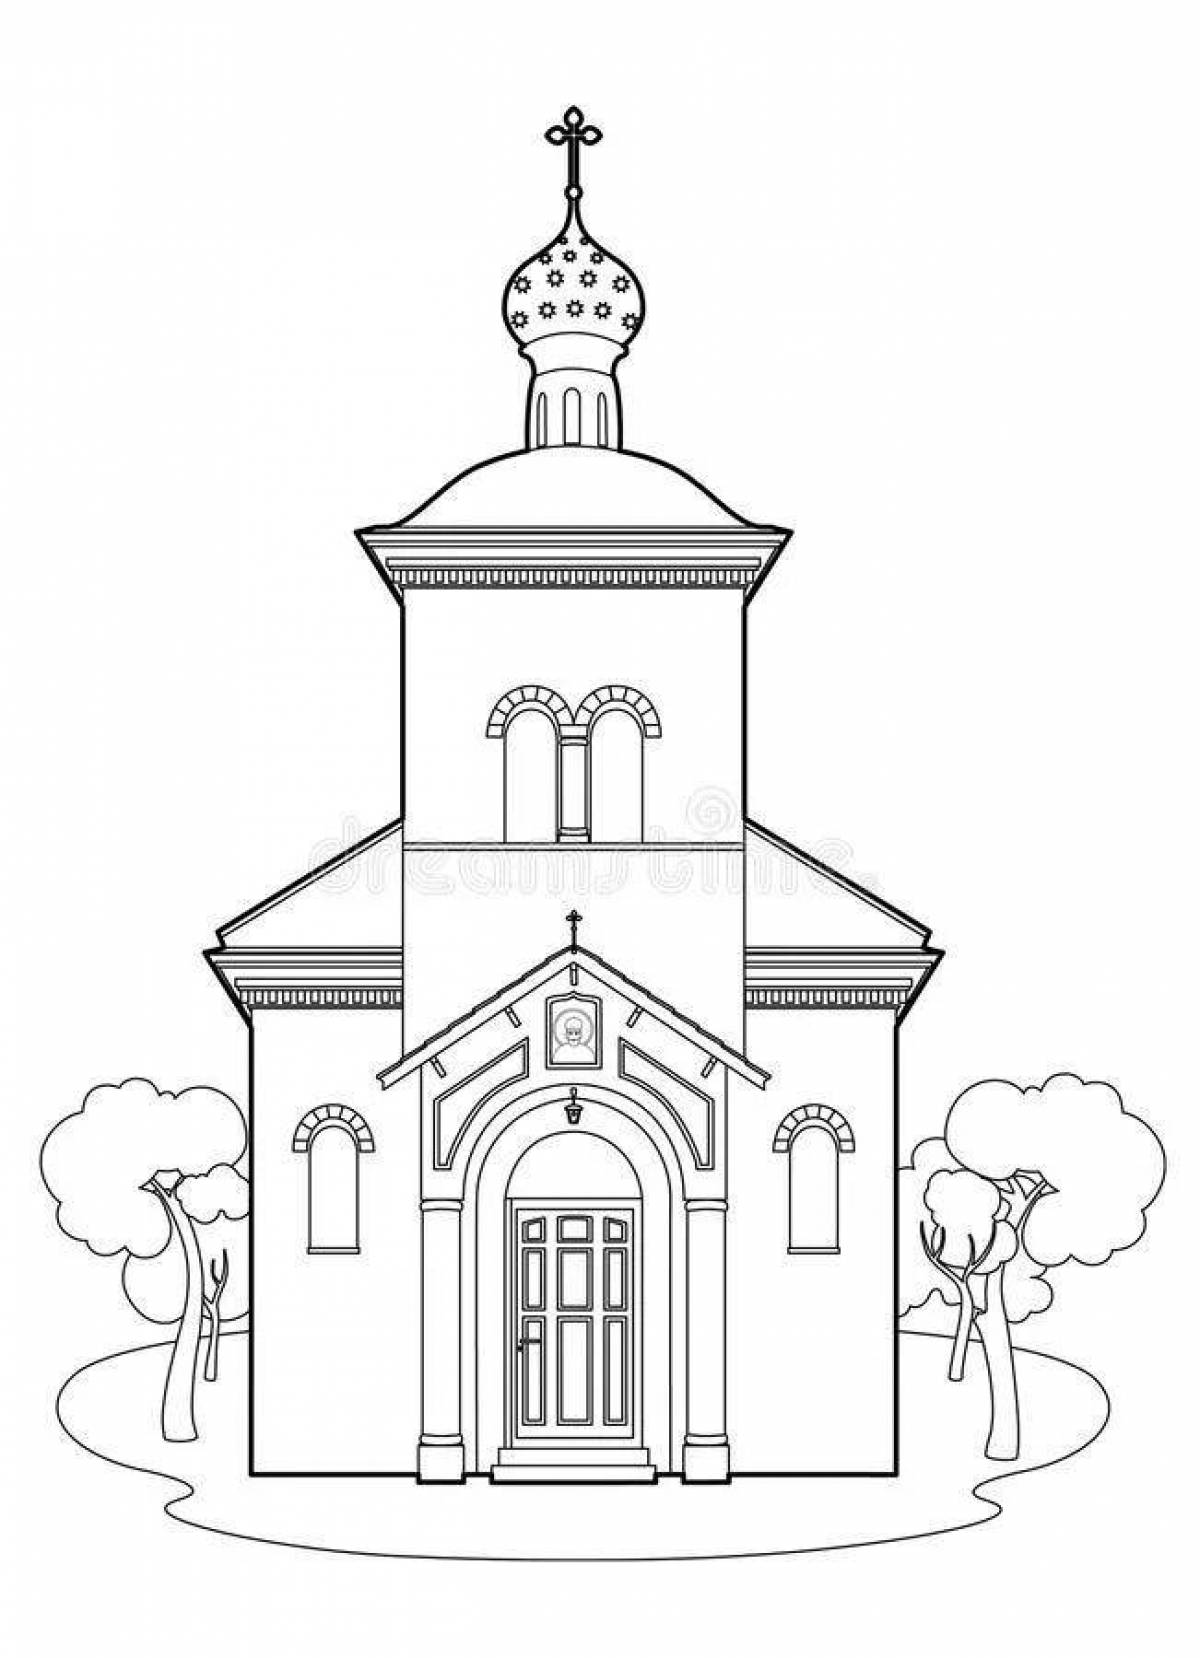 Delightful church drawing